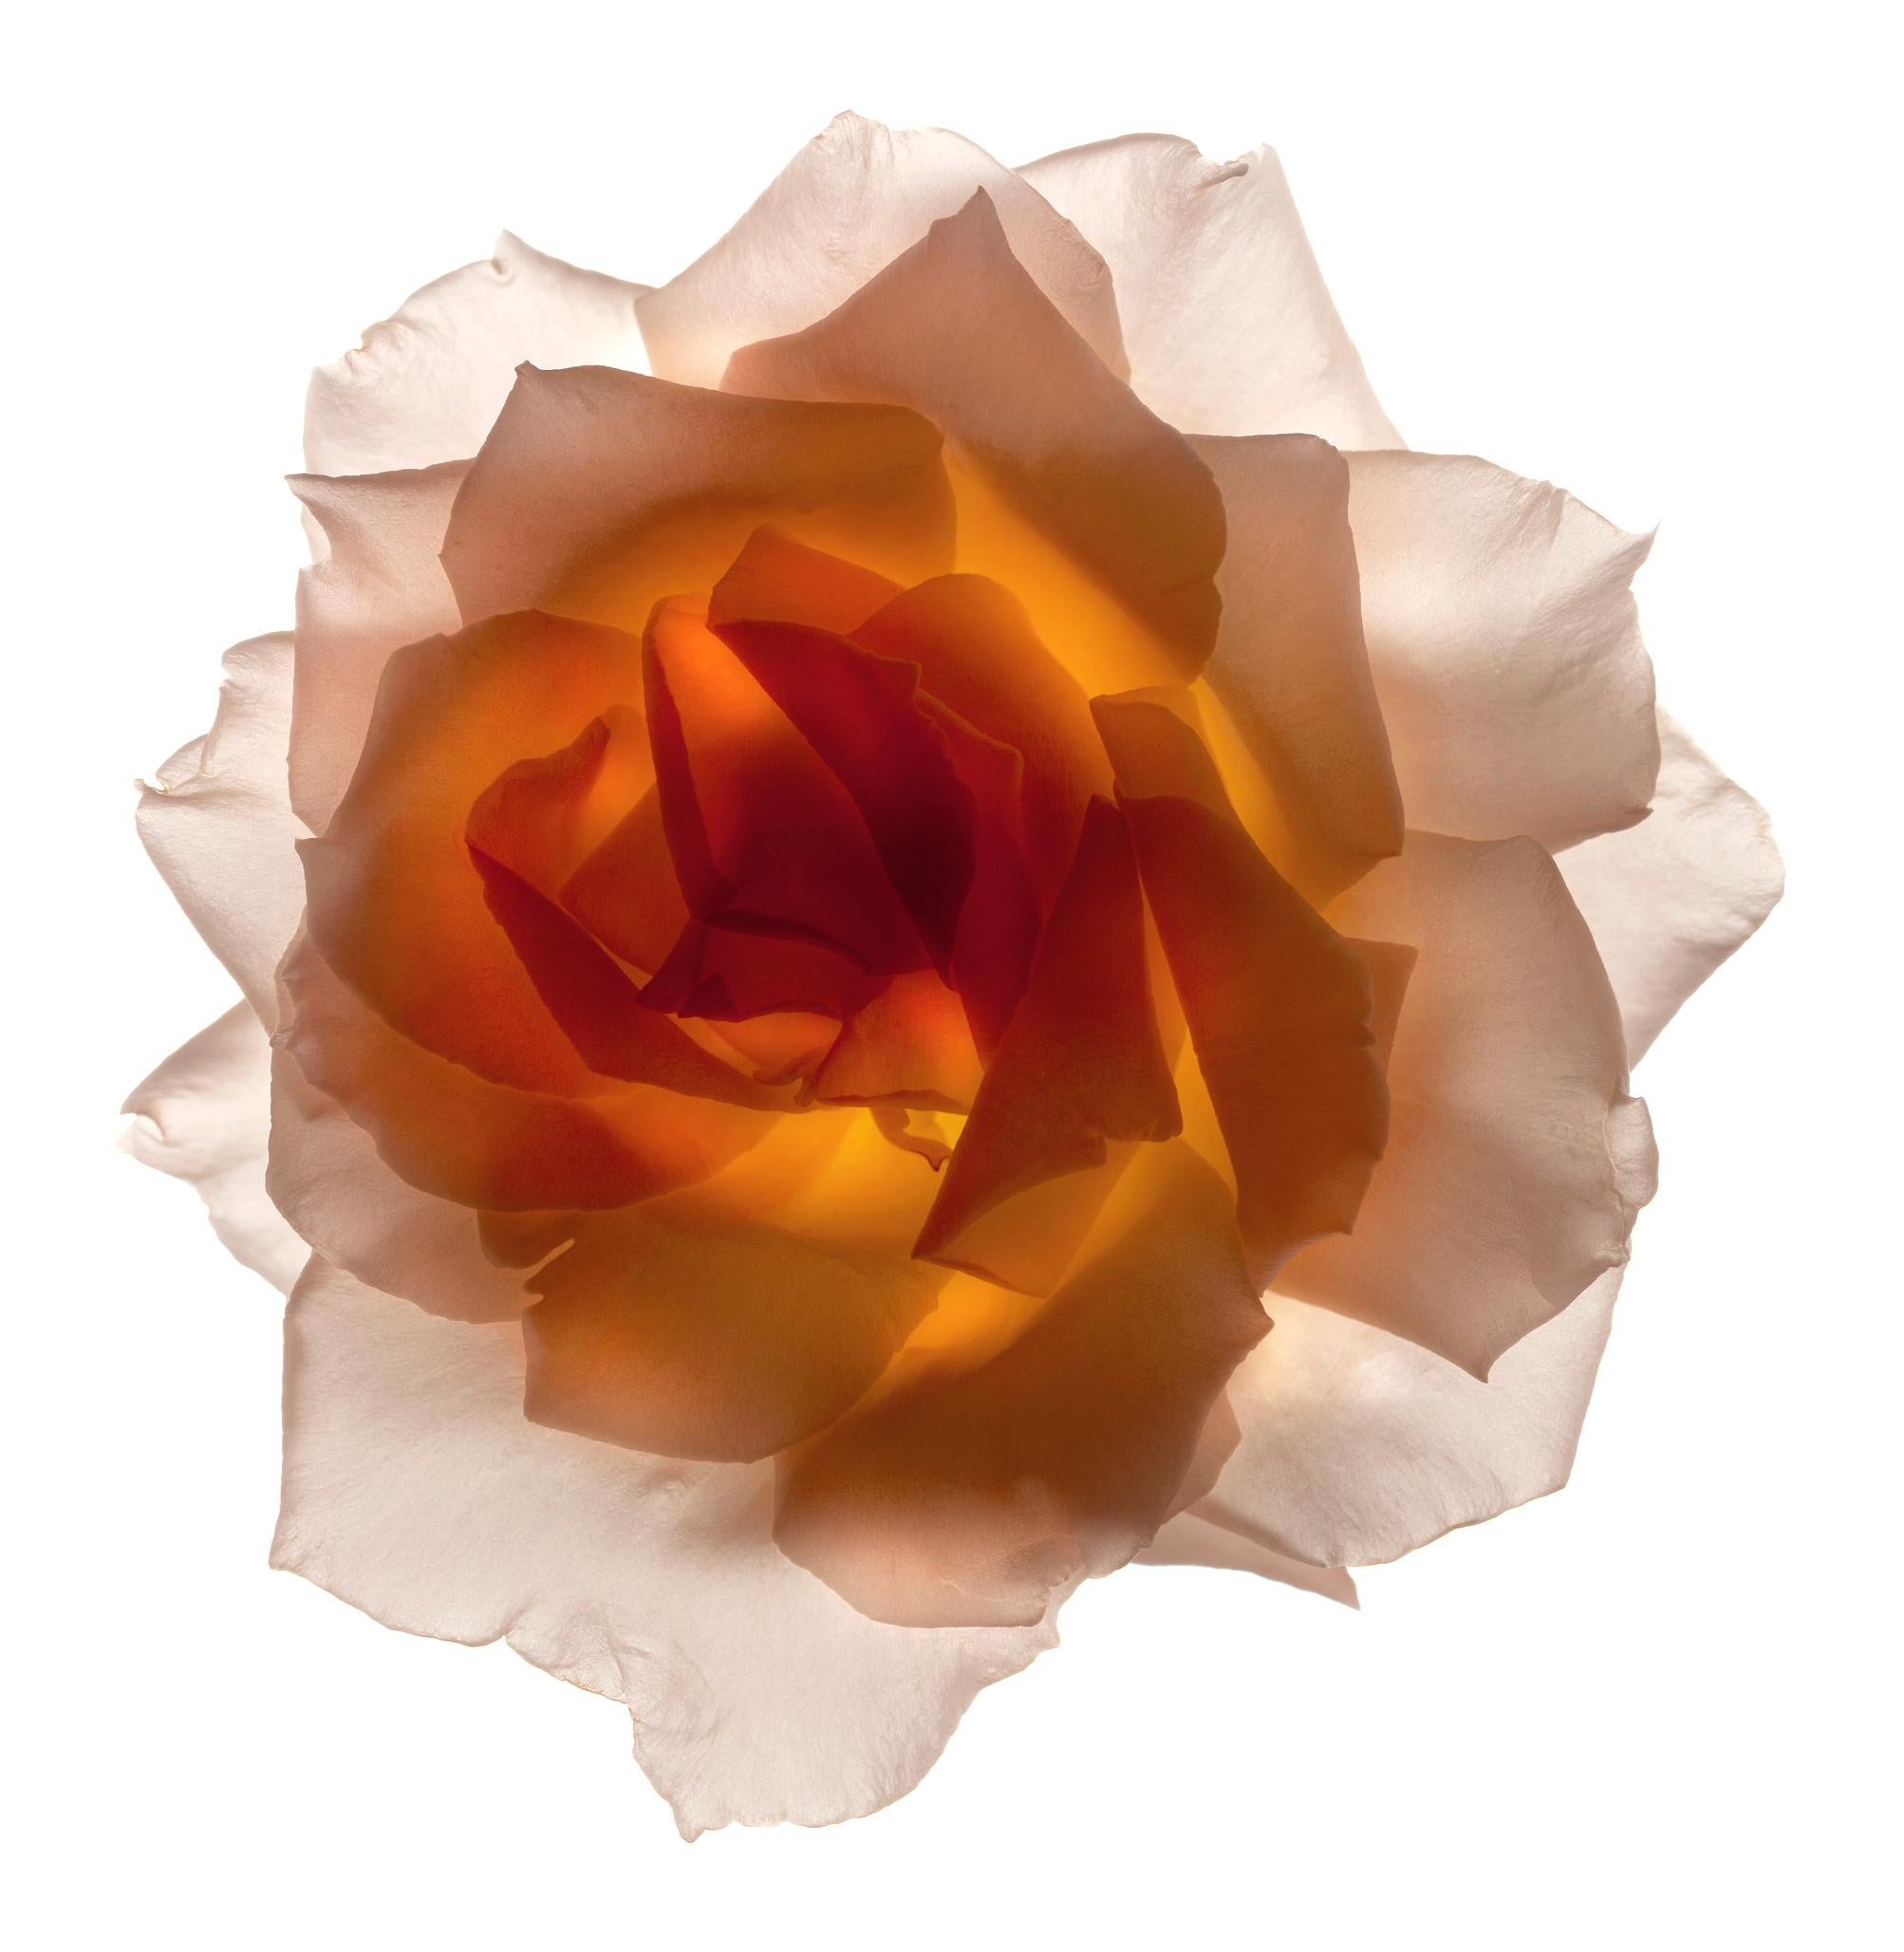 No. 21 (Framed Still Life Photograph of a Pastel Orange Rose Flower on White) 